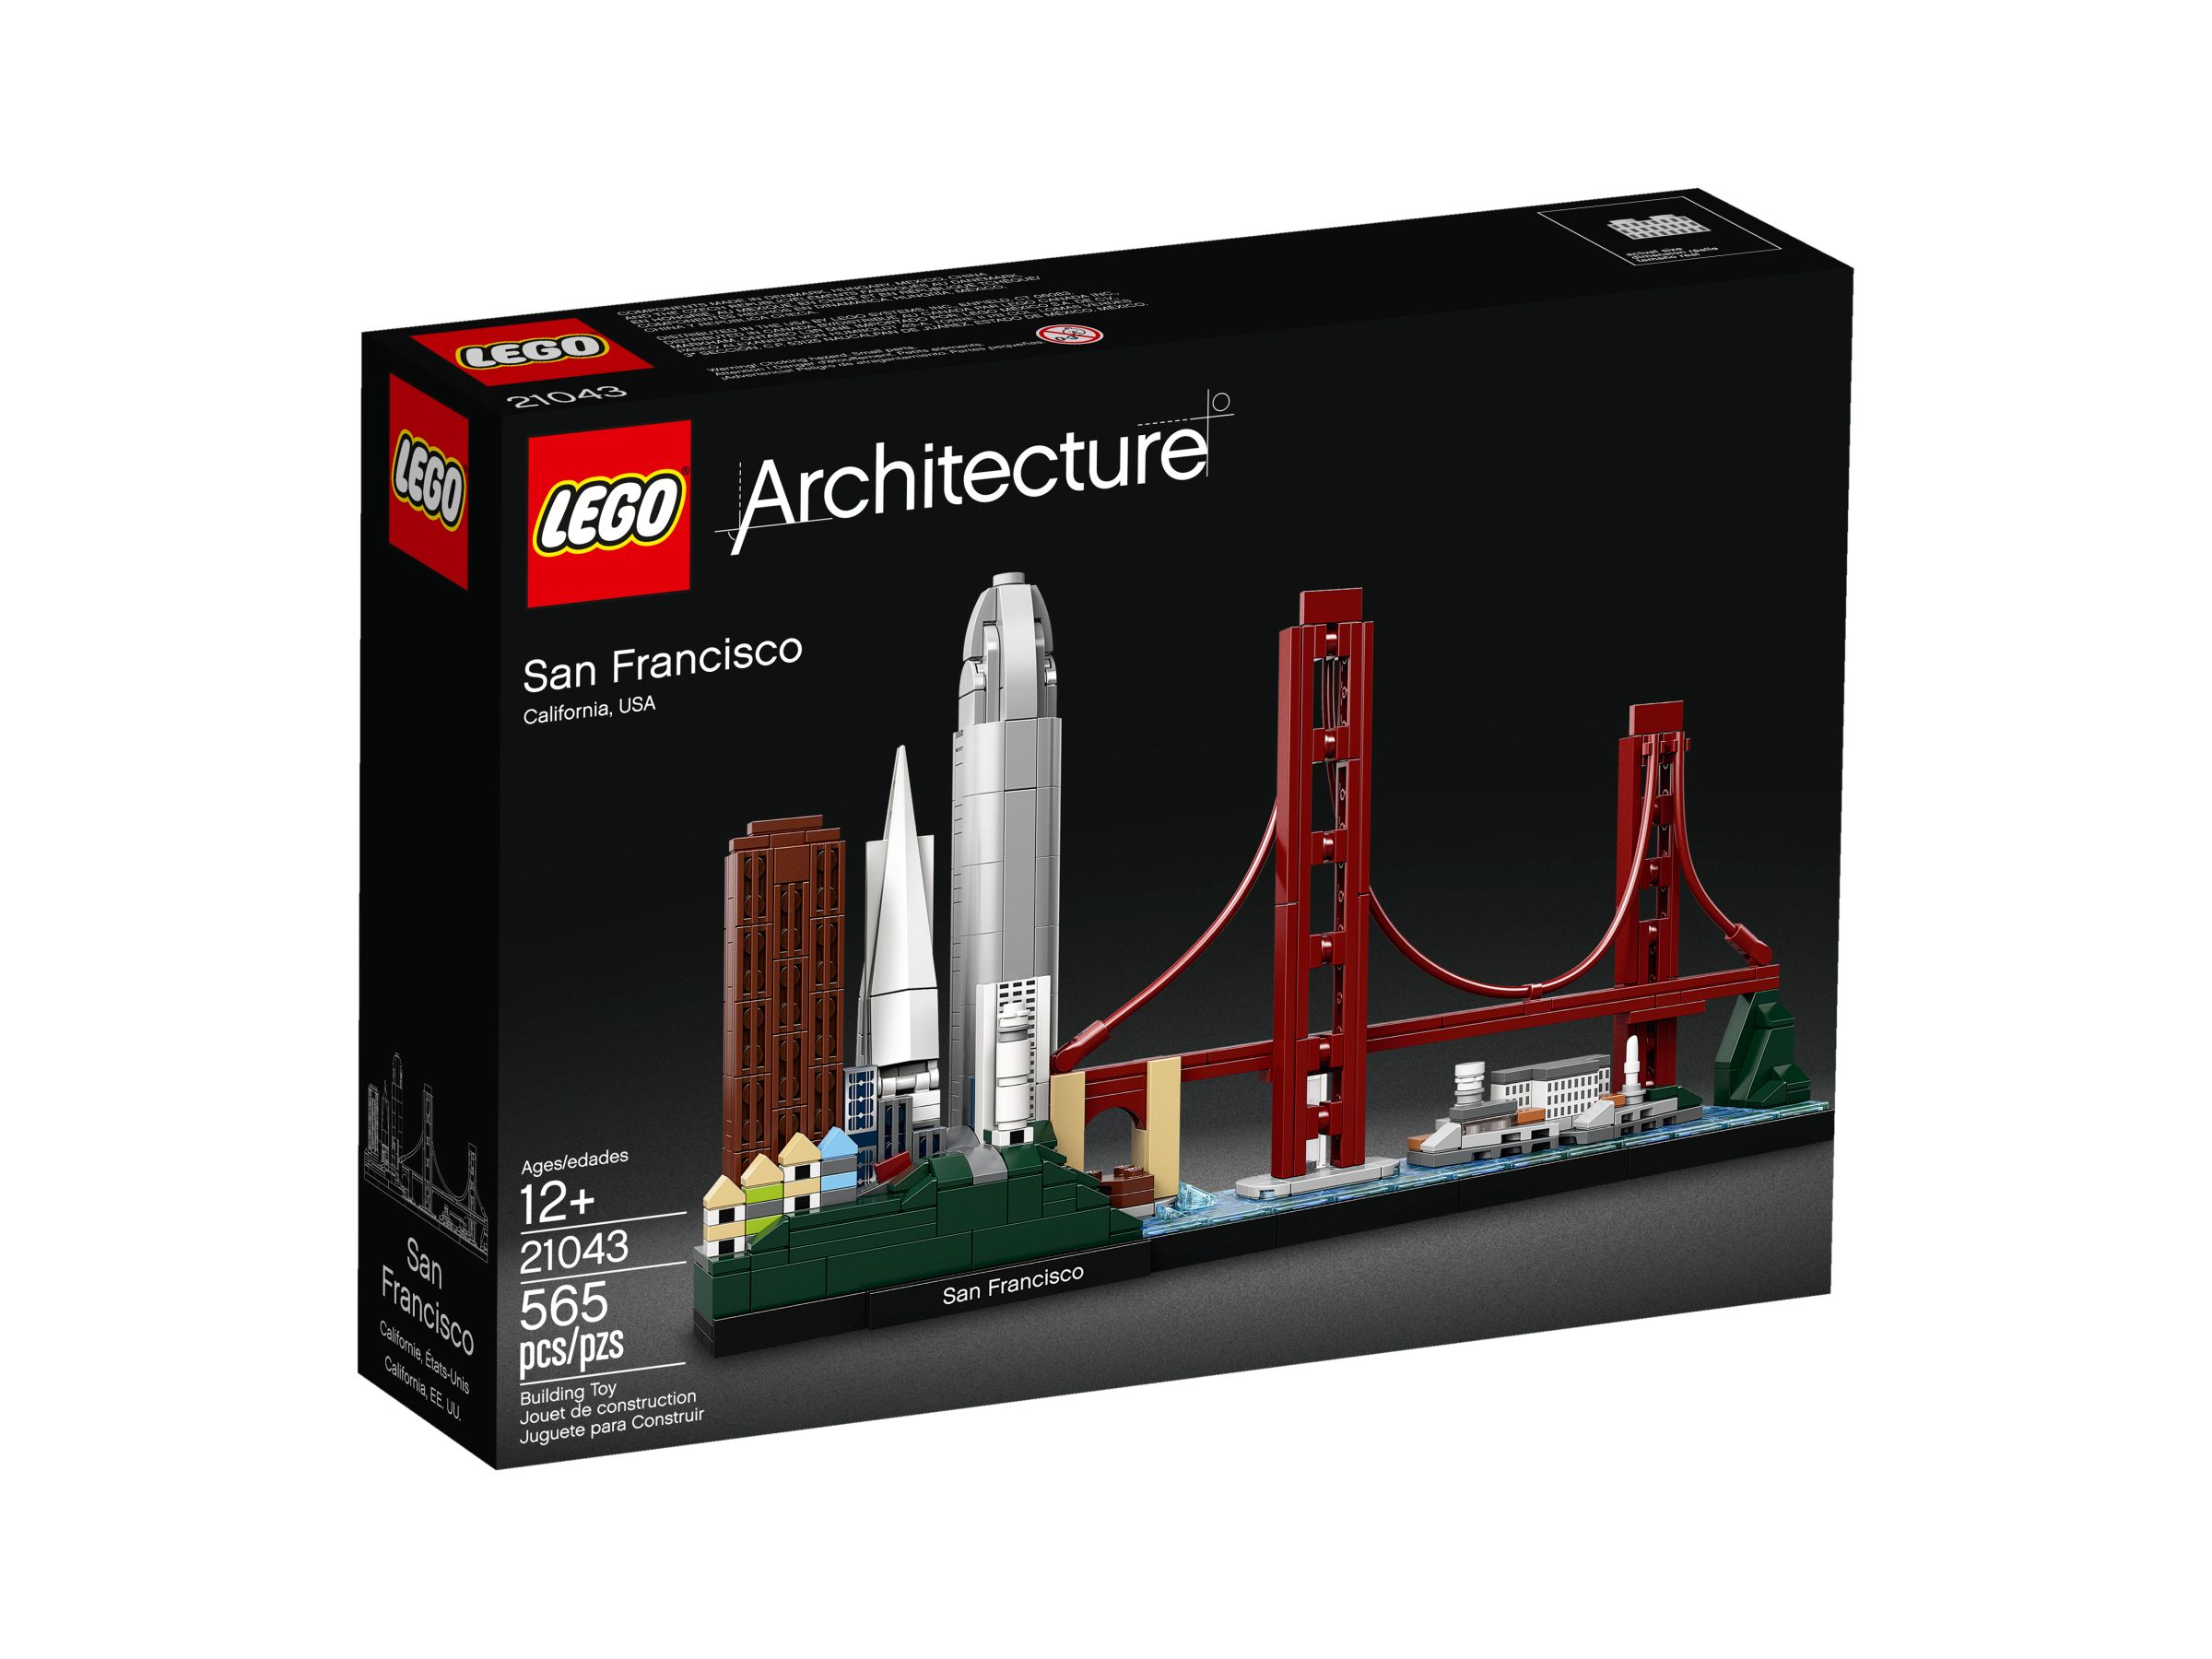 LEGO Architecture 21043 San Francisco LEGO_21043_alt1.jpg